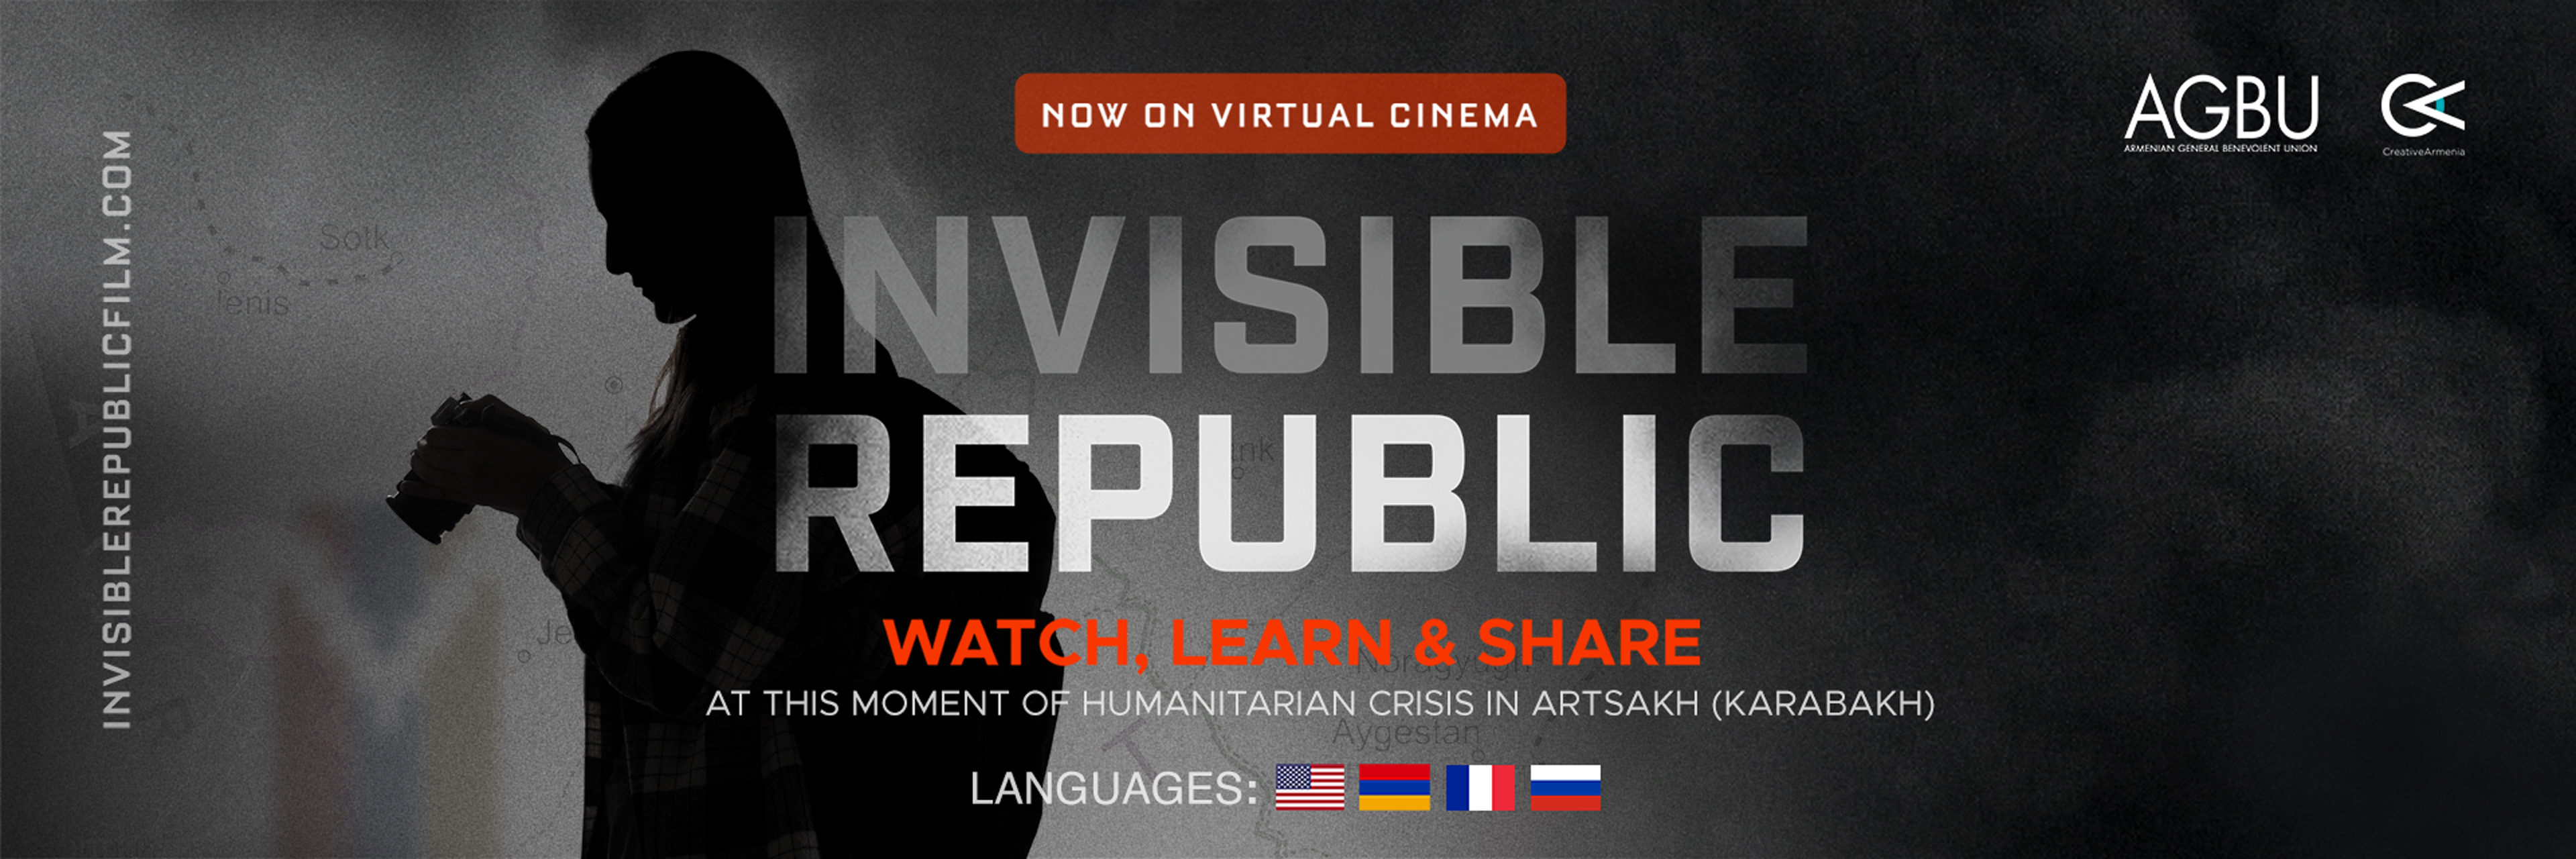 Invisible Republic Live Now